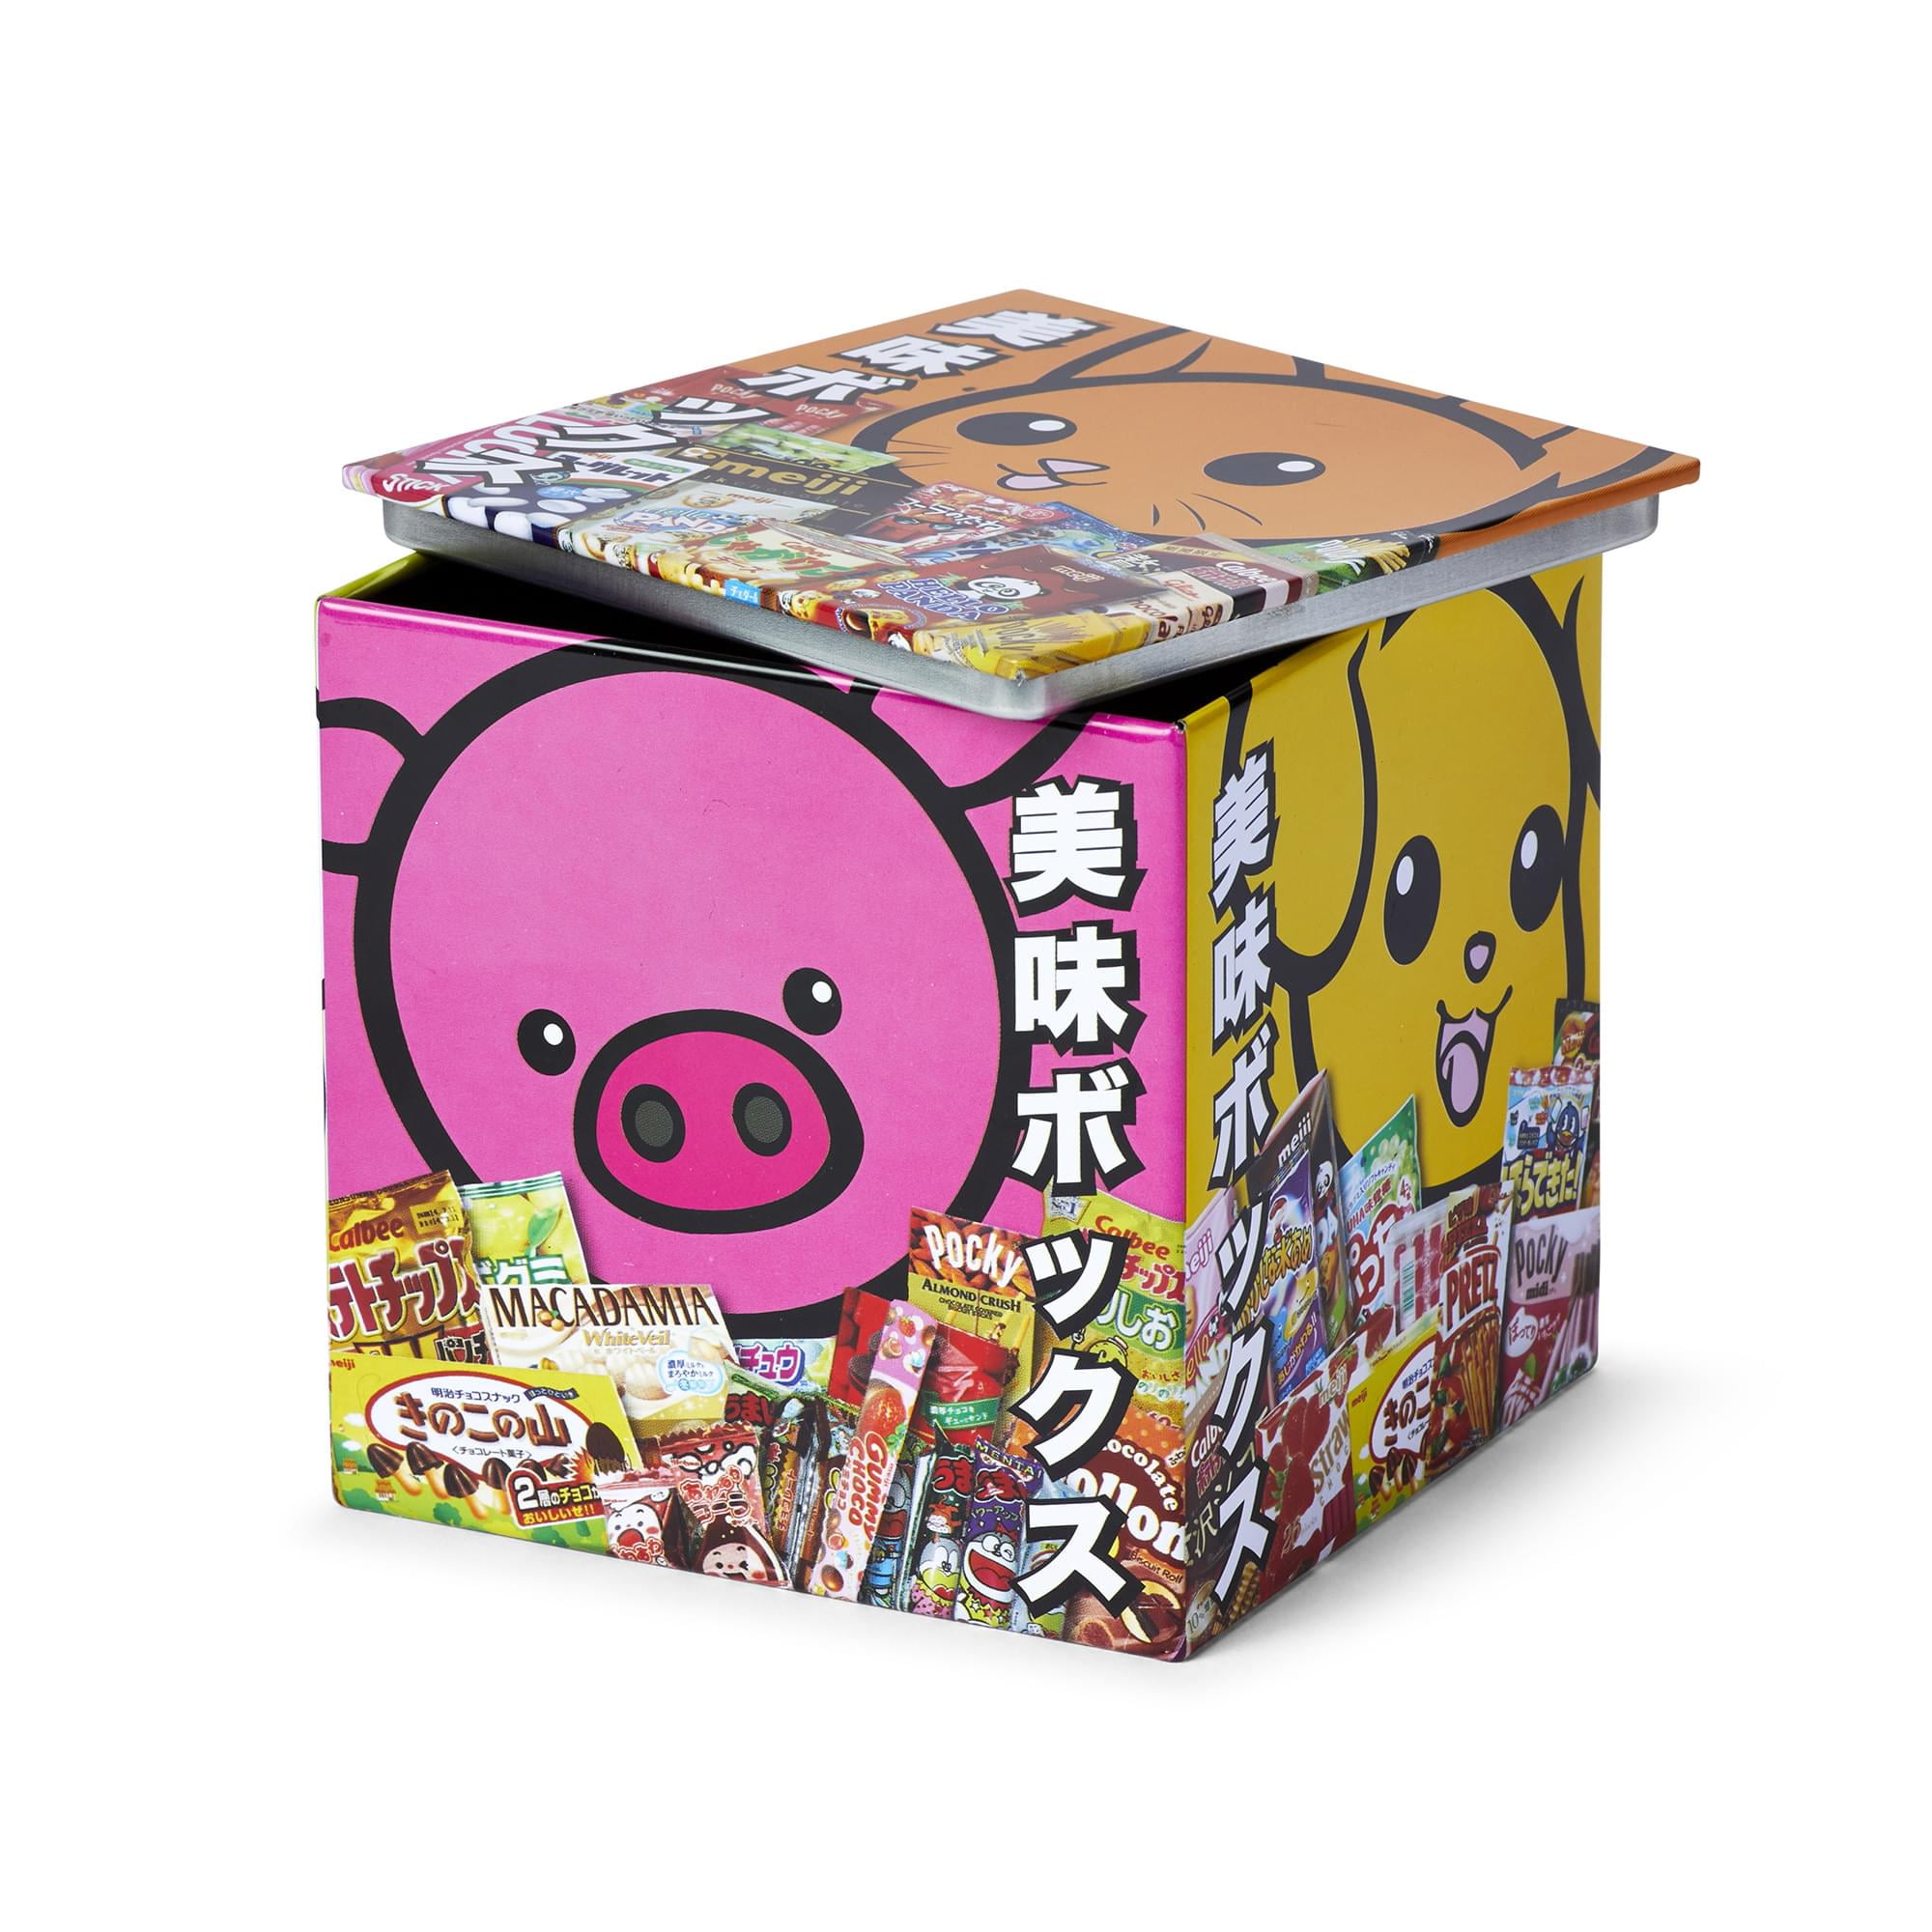 japanese snack box amazon